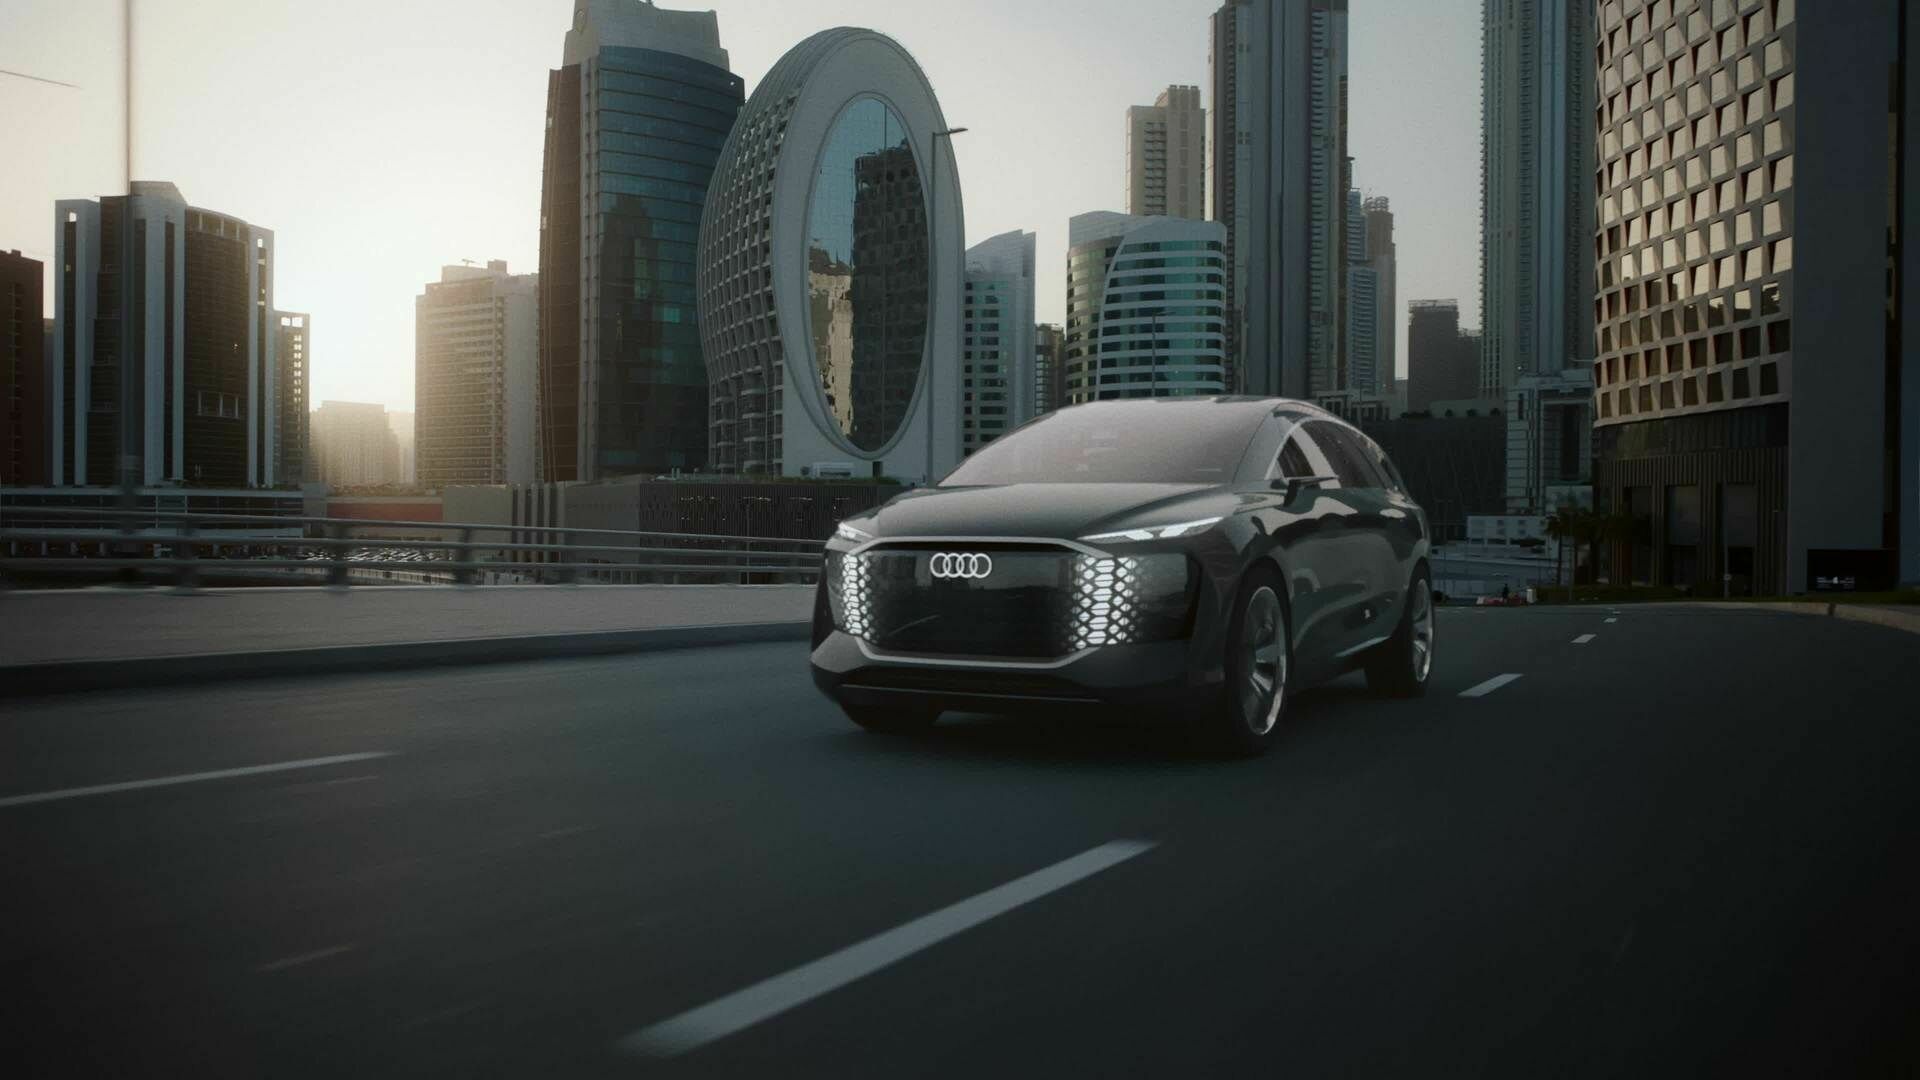 Audi urbansphere concept – Trailer